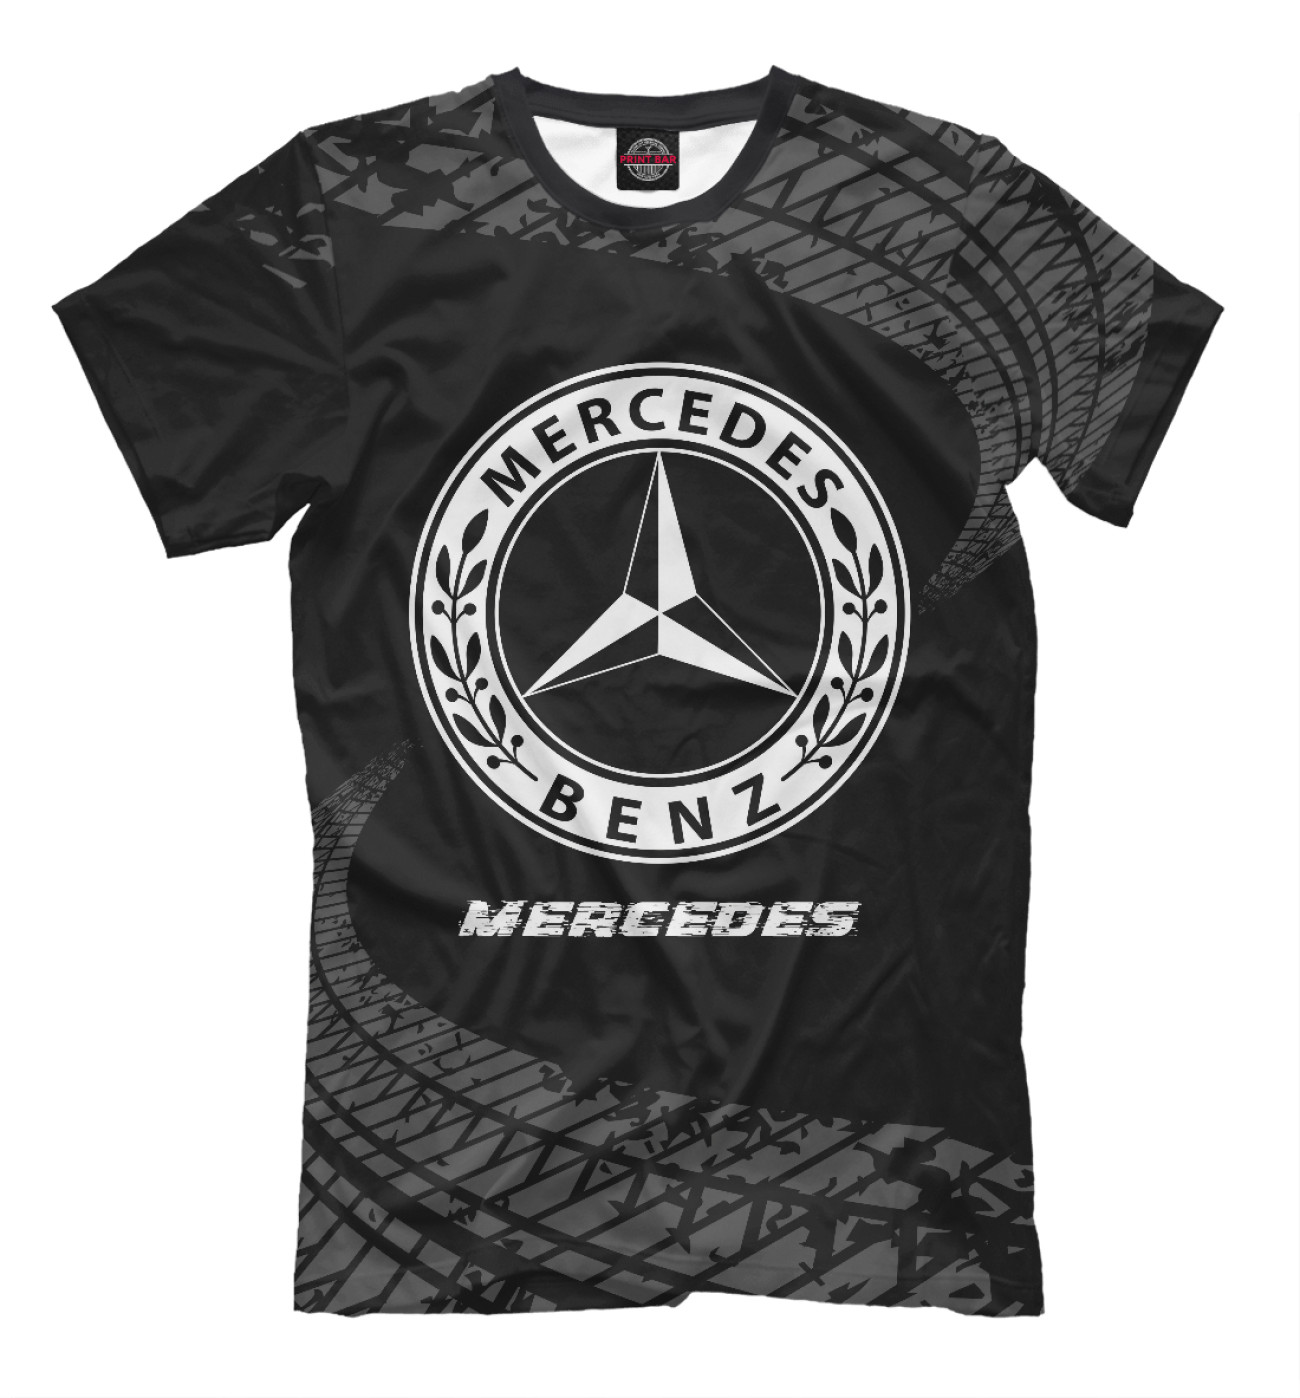 Мужская Футболка Mercedes Speed Tires на темном, артикул: MER-678625-fut-2